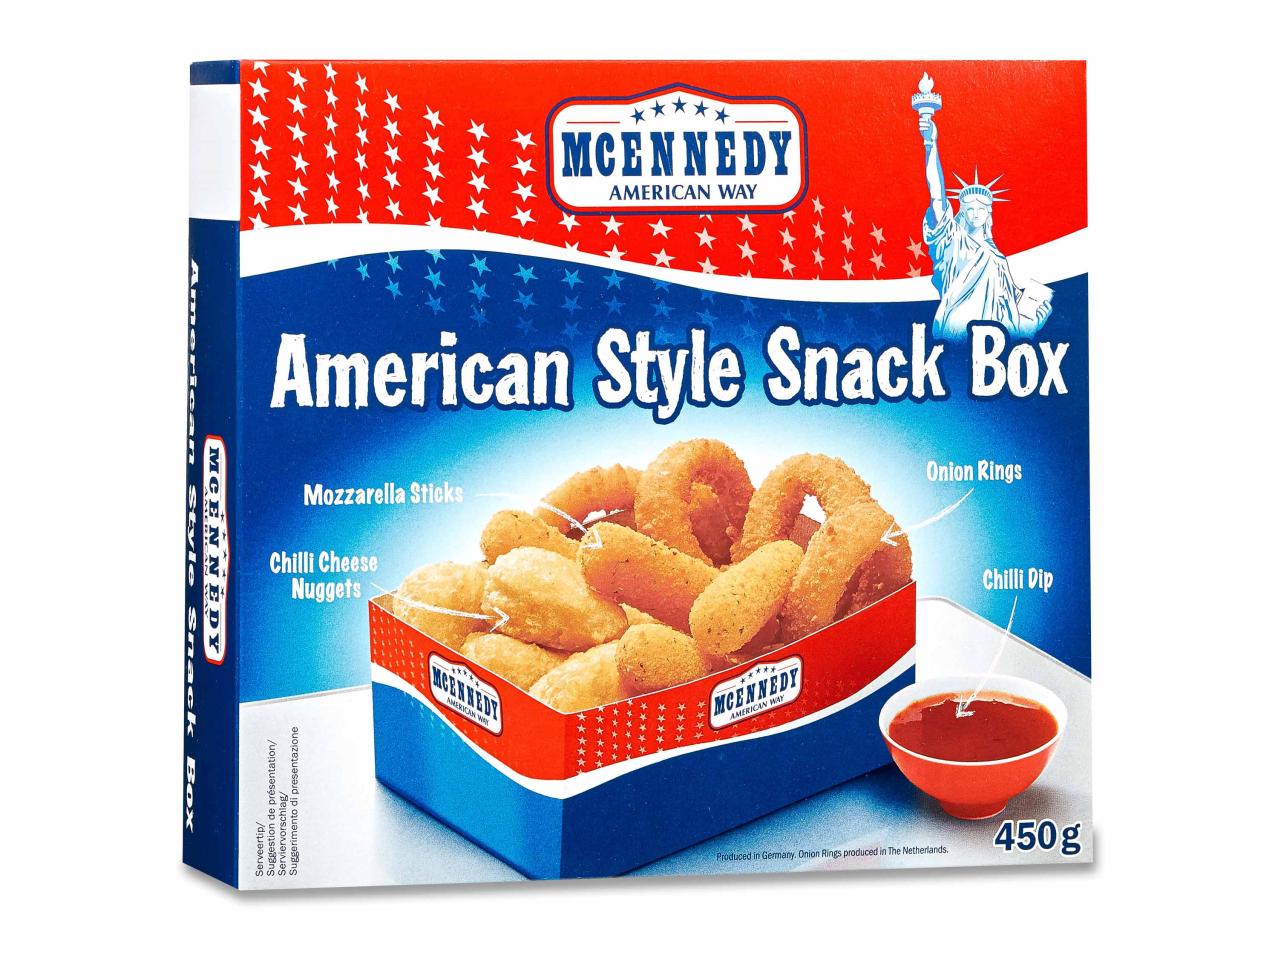 American style snack box